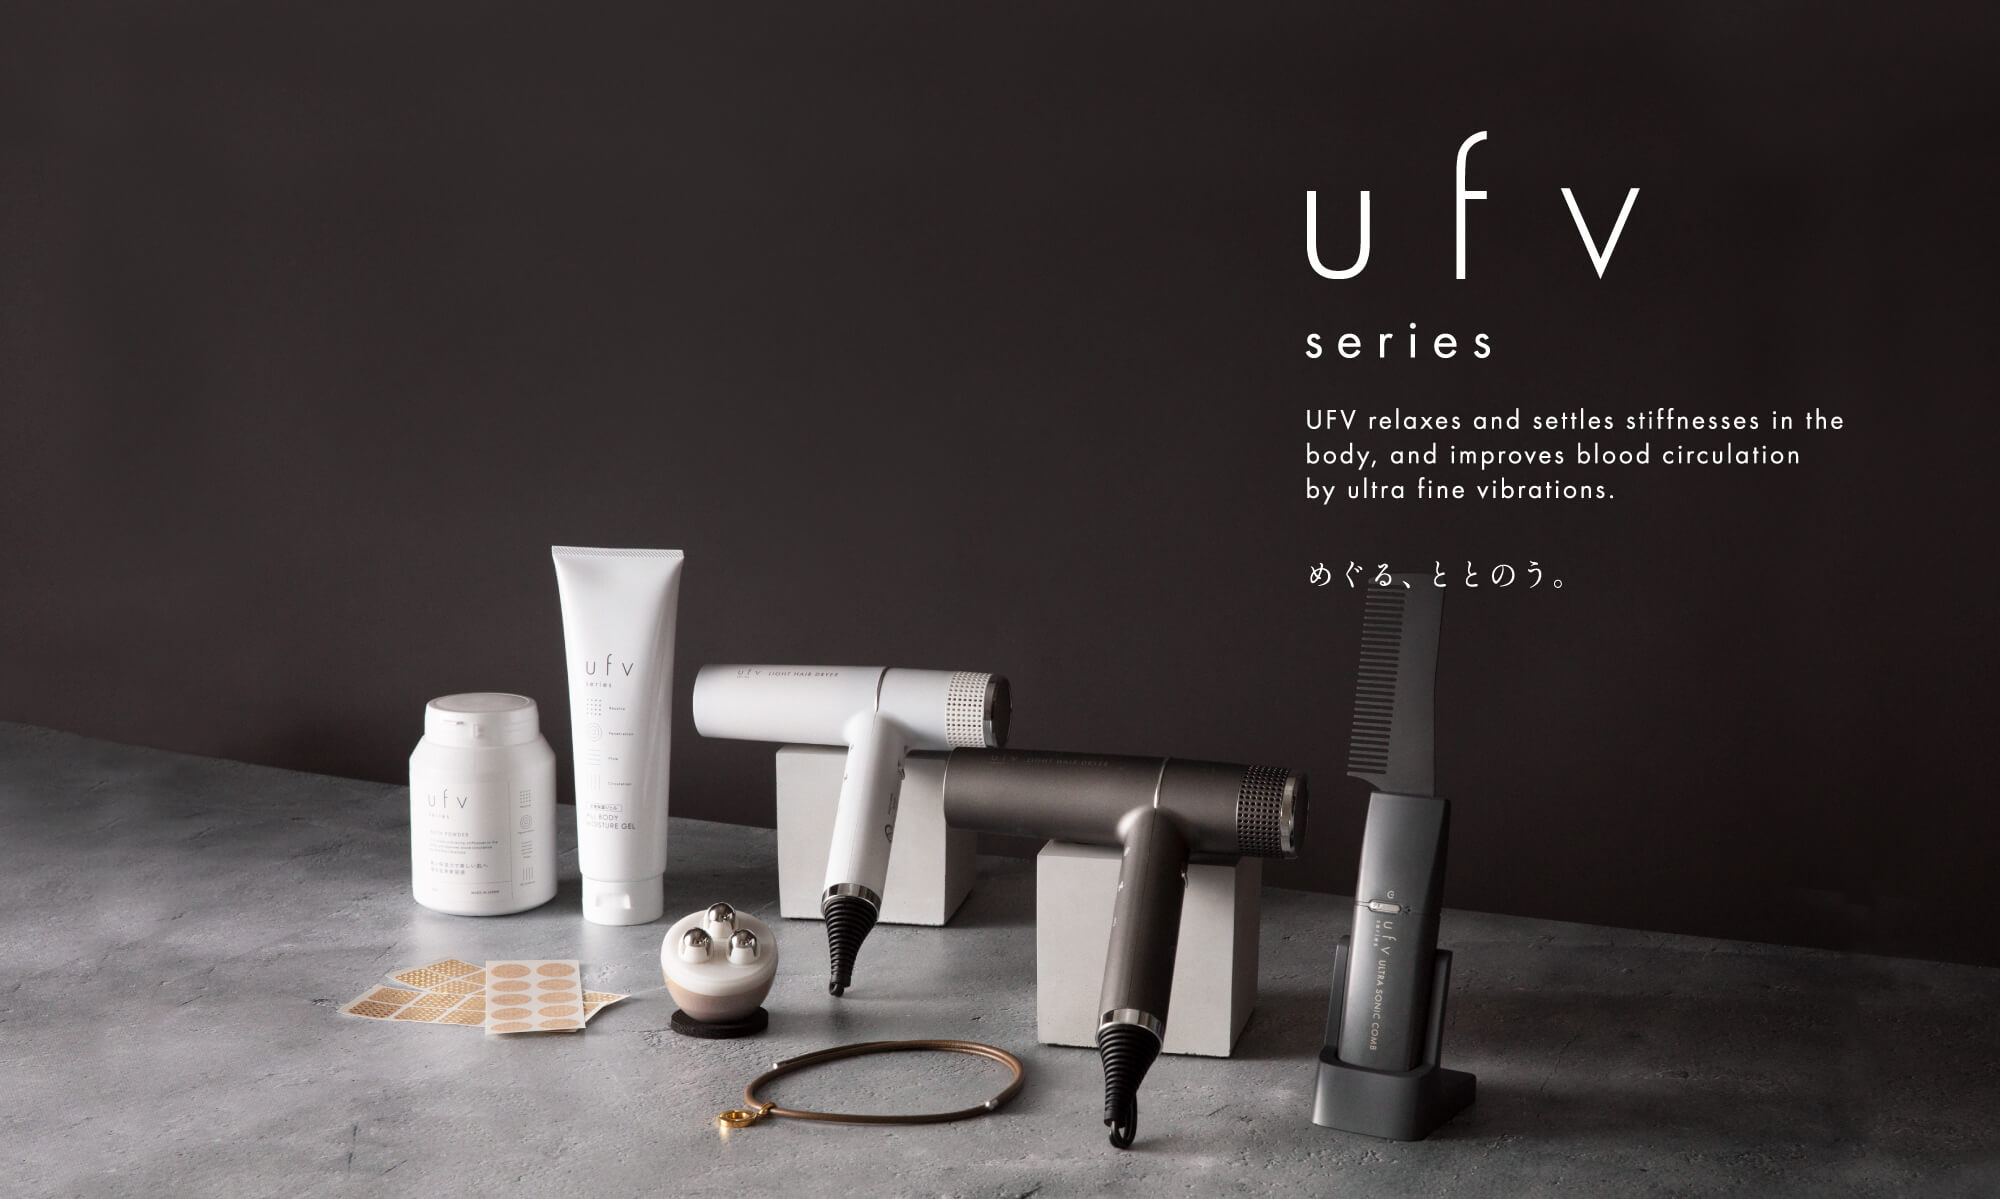 ufv series | 株式会社ビーエイチ | 理美容・エステサロン向けオリジナル商品の企画開発